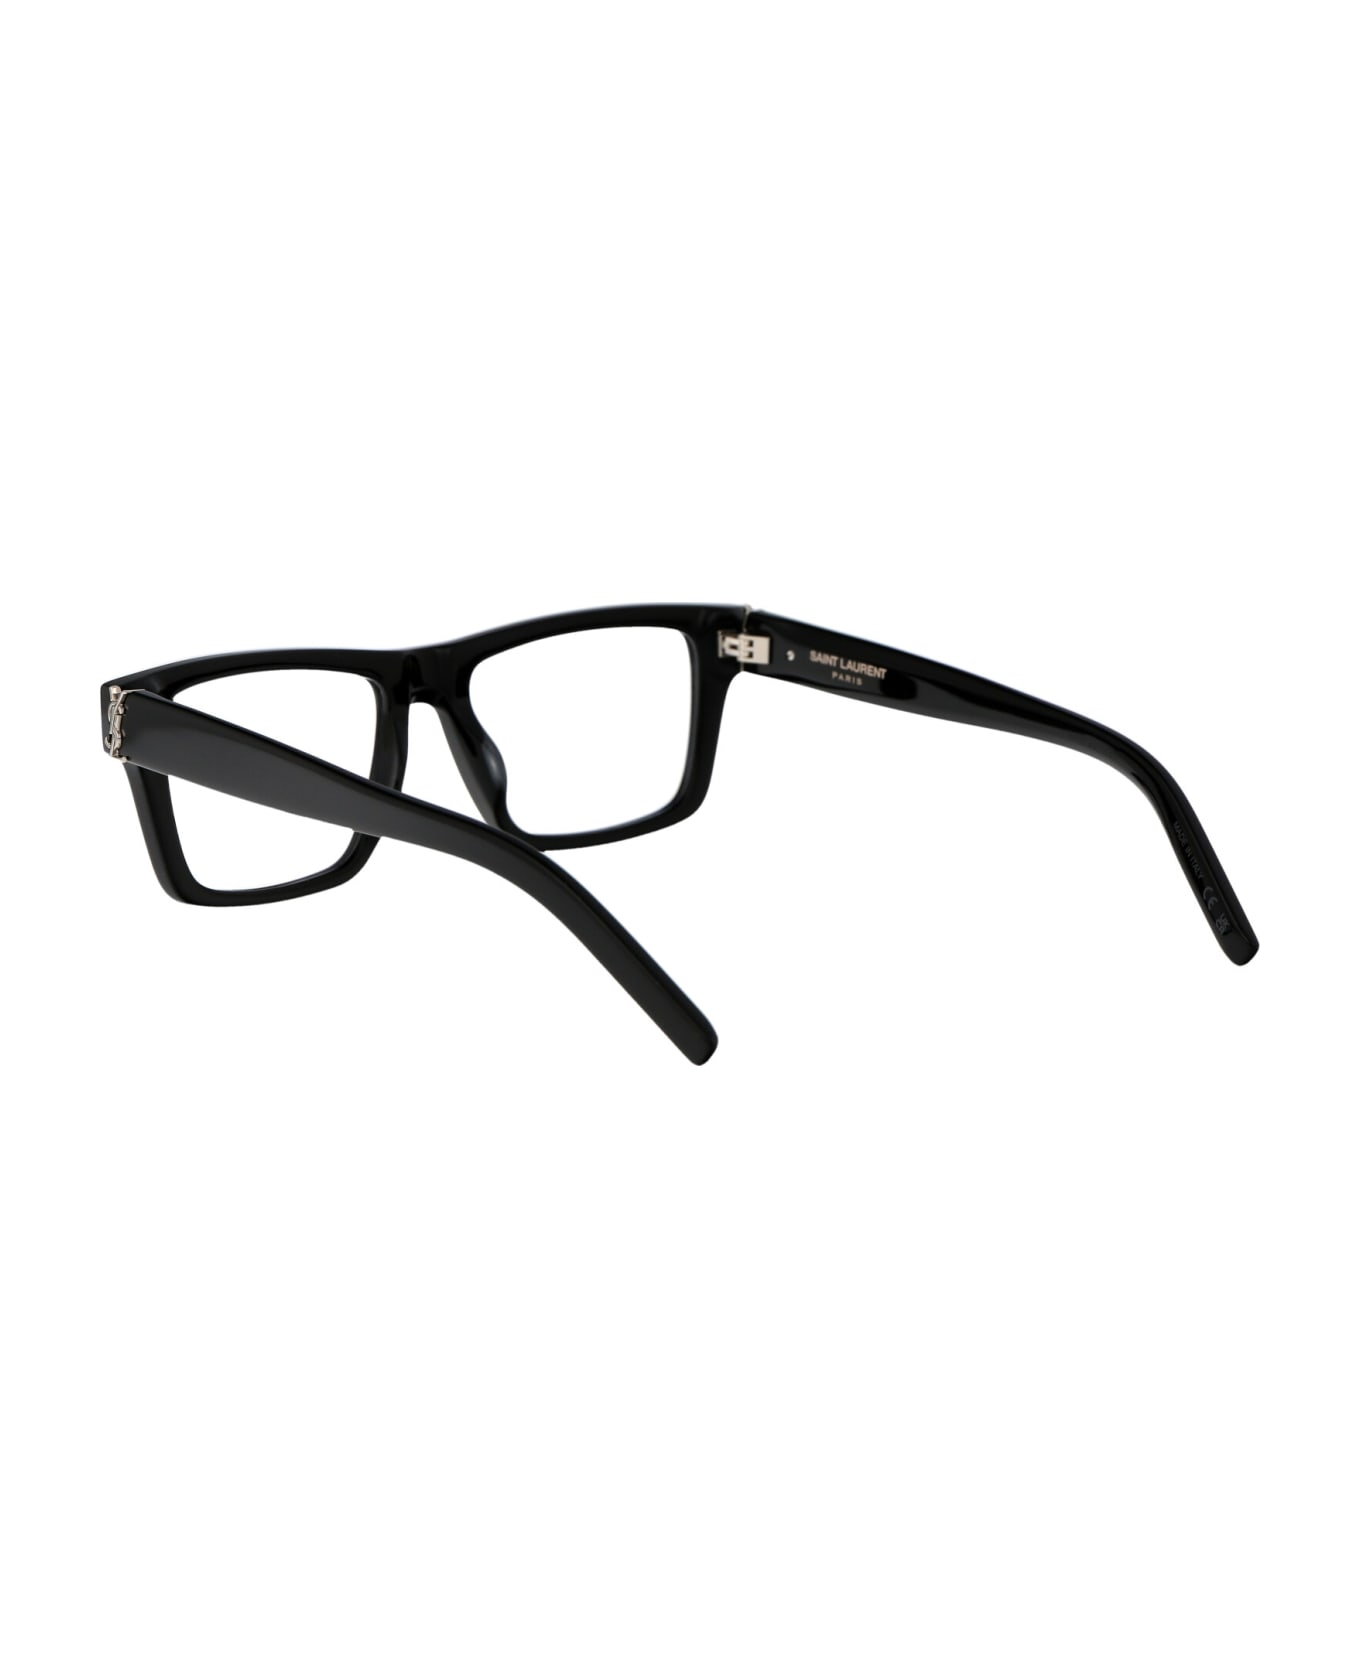 Saint Laurent Eyewear Sl M10_b Glasses - 001 BLACK BLACK TRANSPARENT